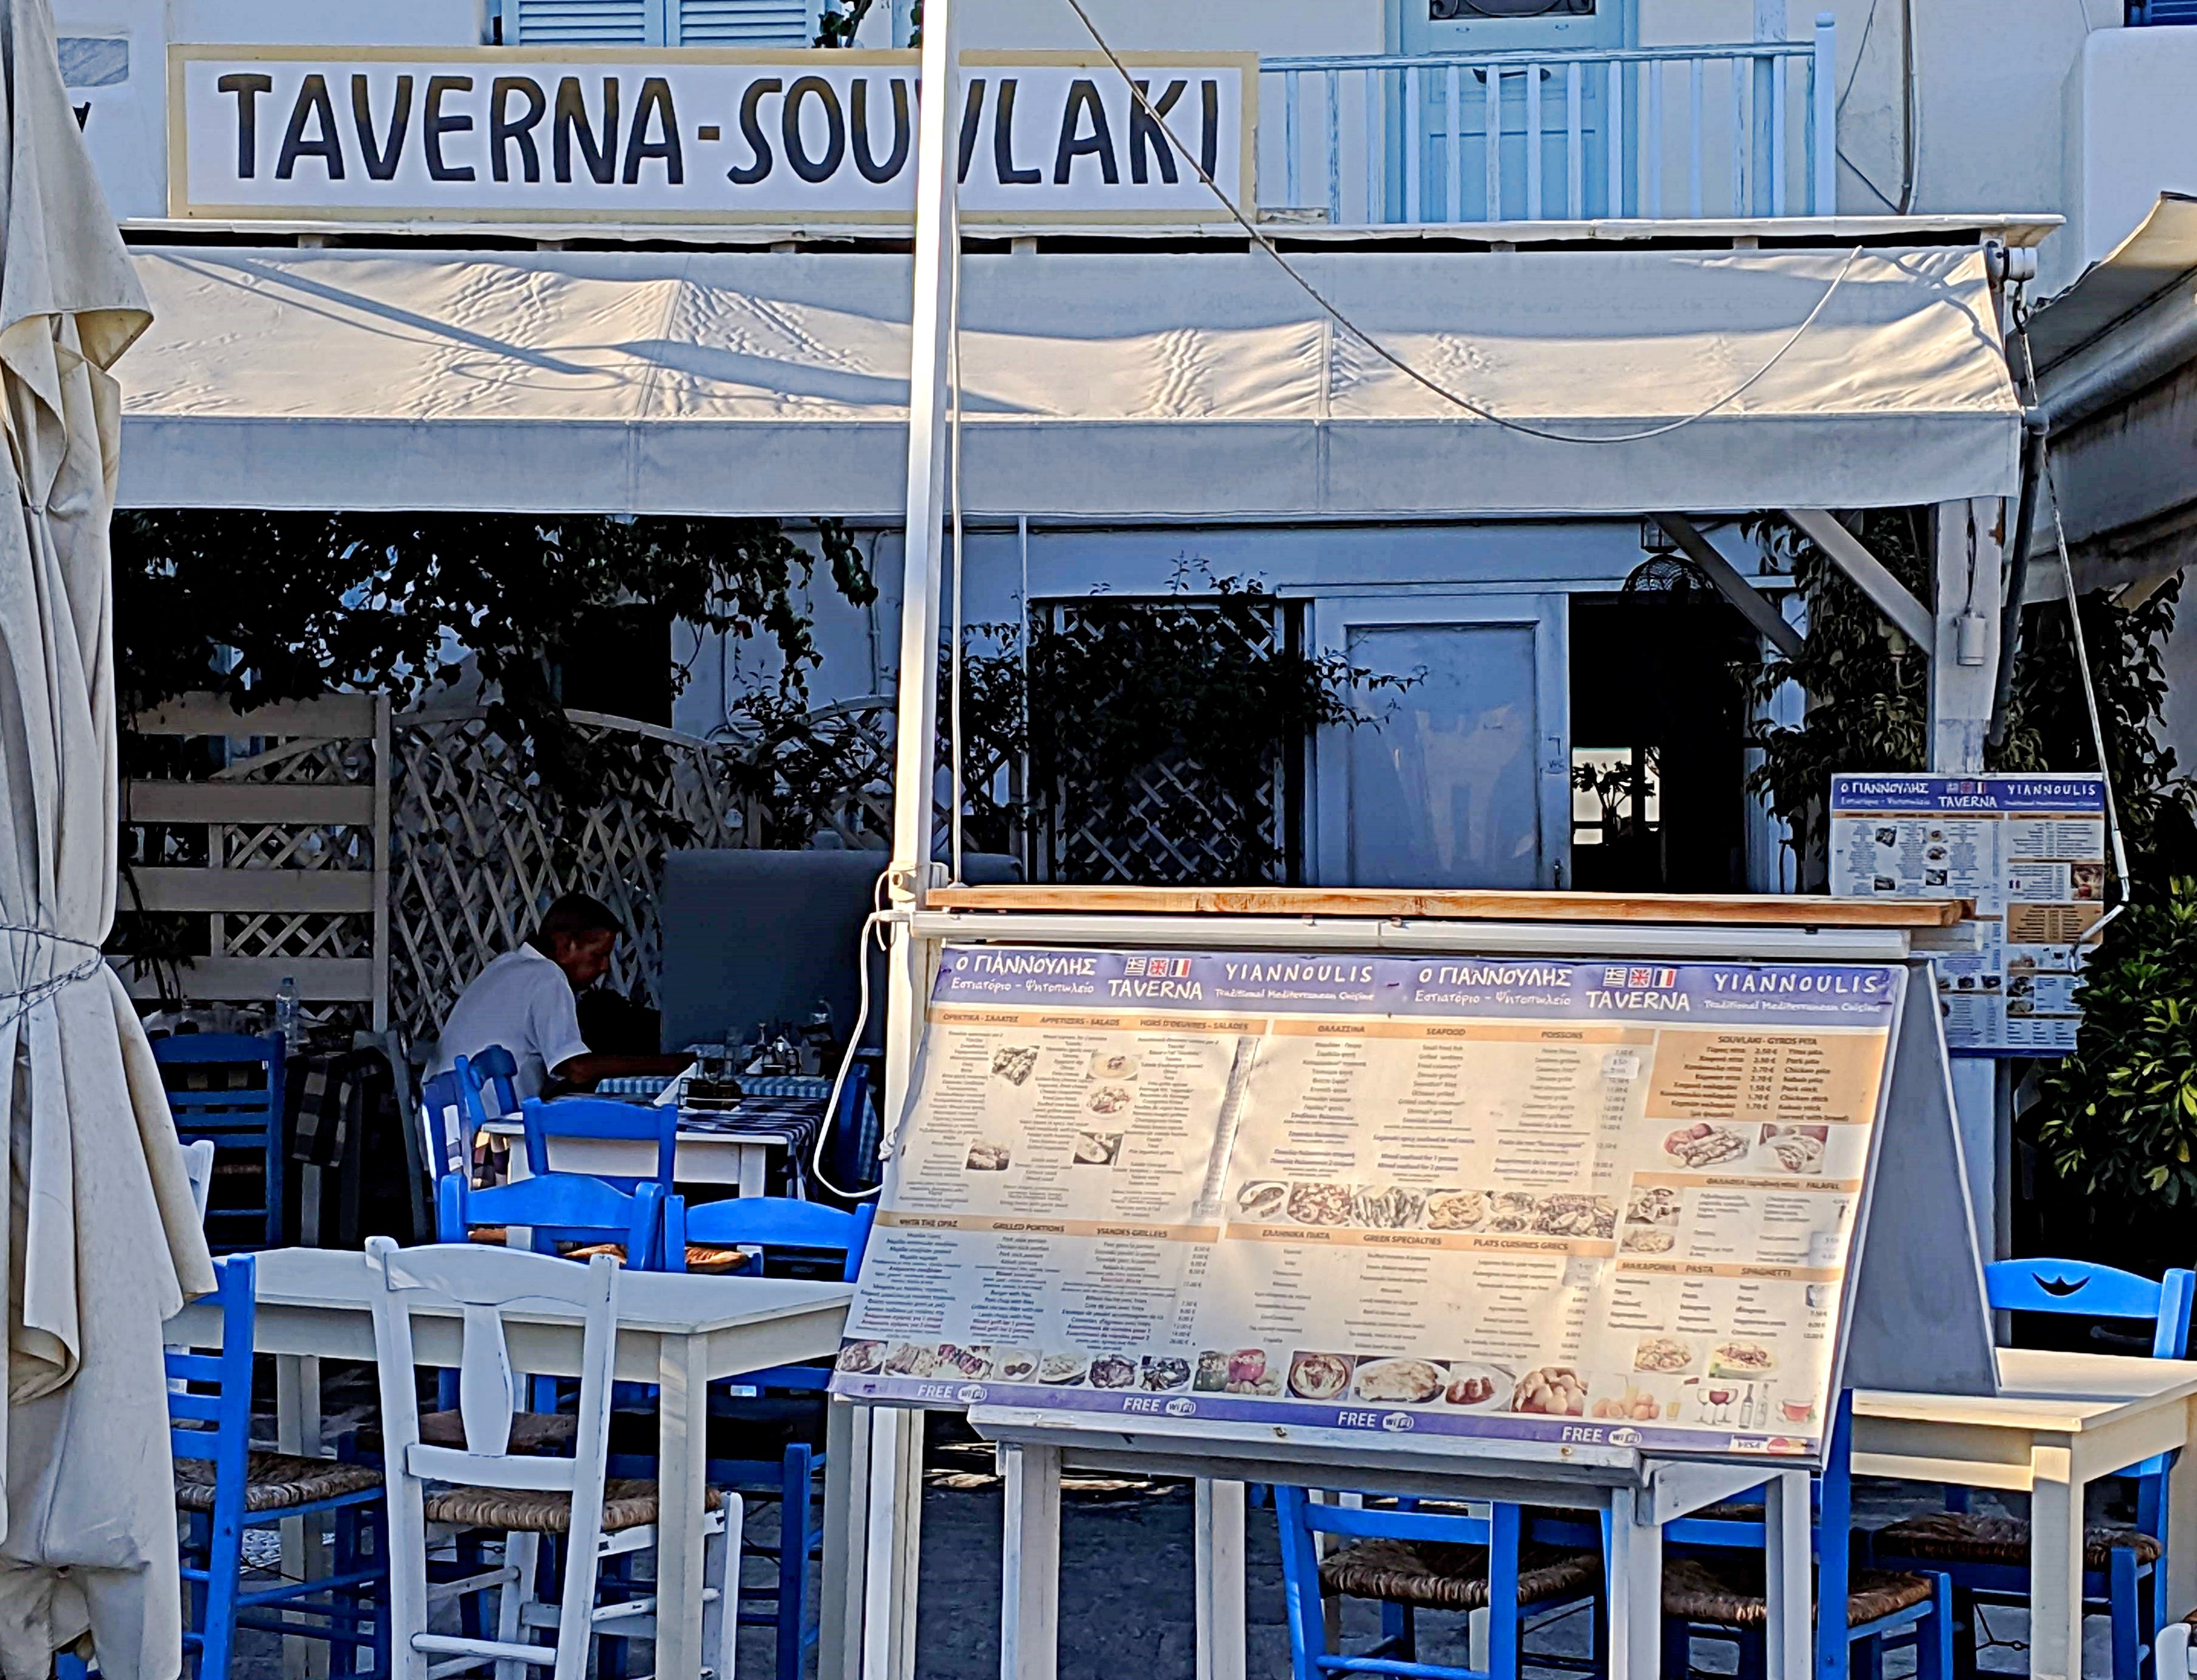 The entrance to Yiannoulis Taverna in Parikia